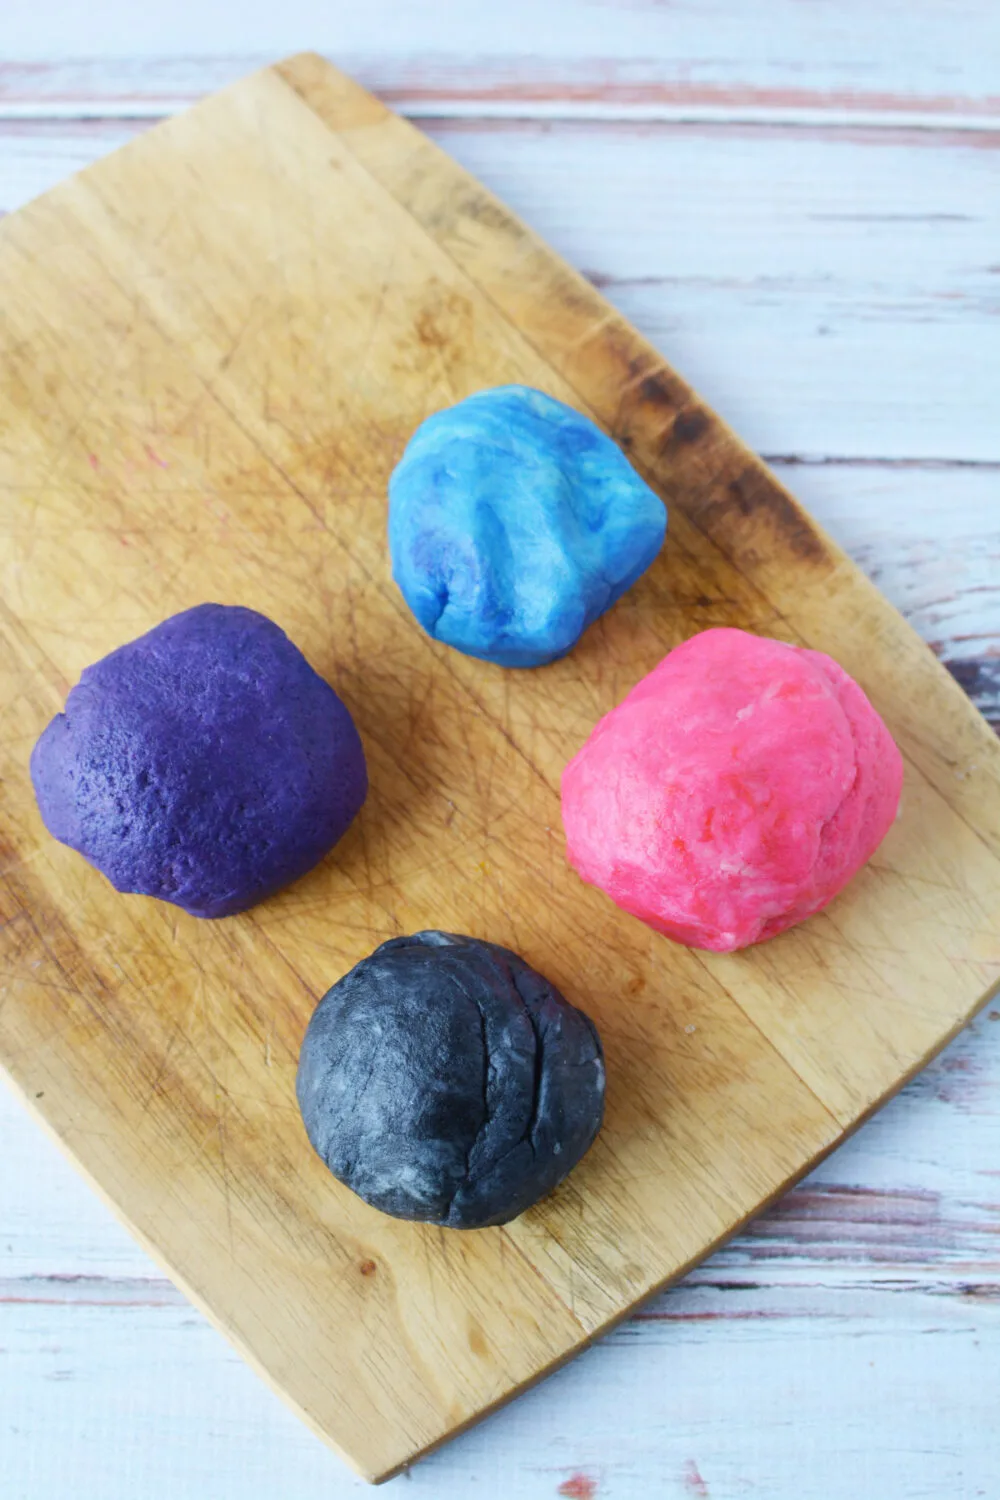 Four round balls of colored shortbread dough. 